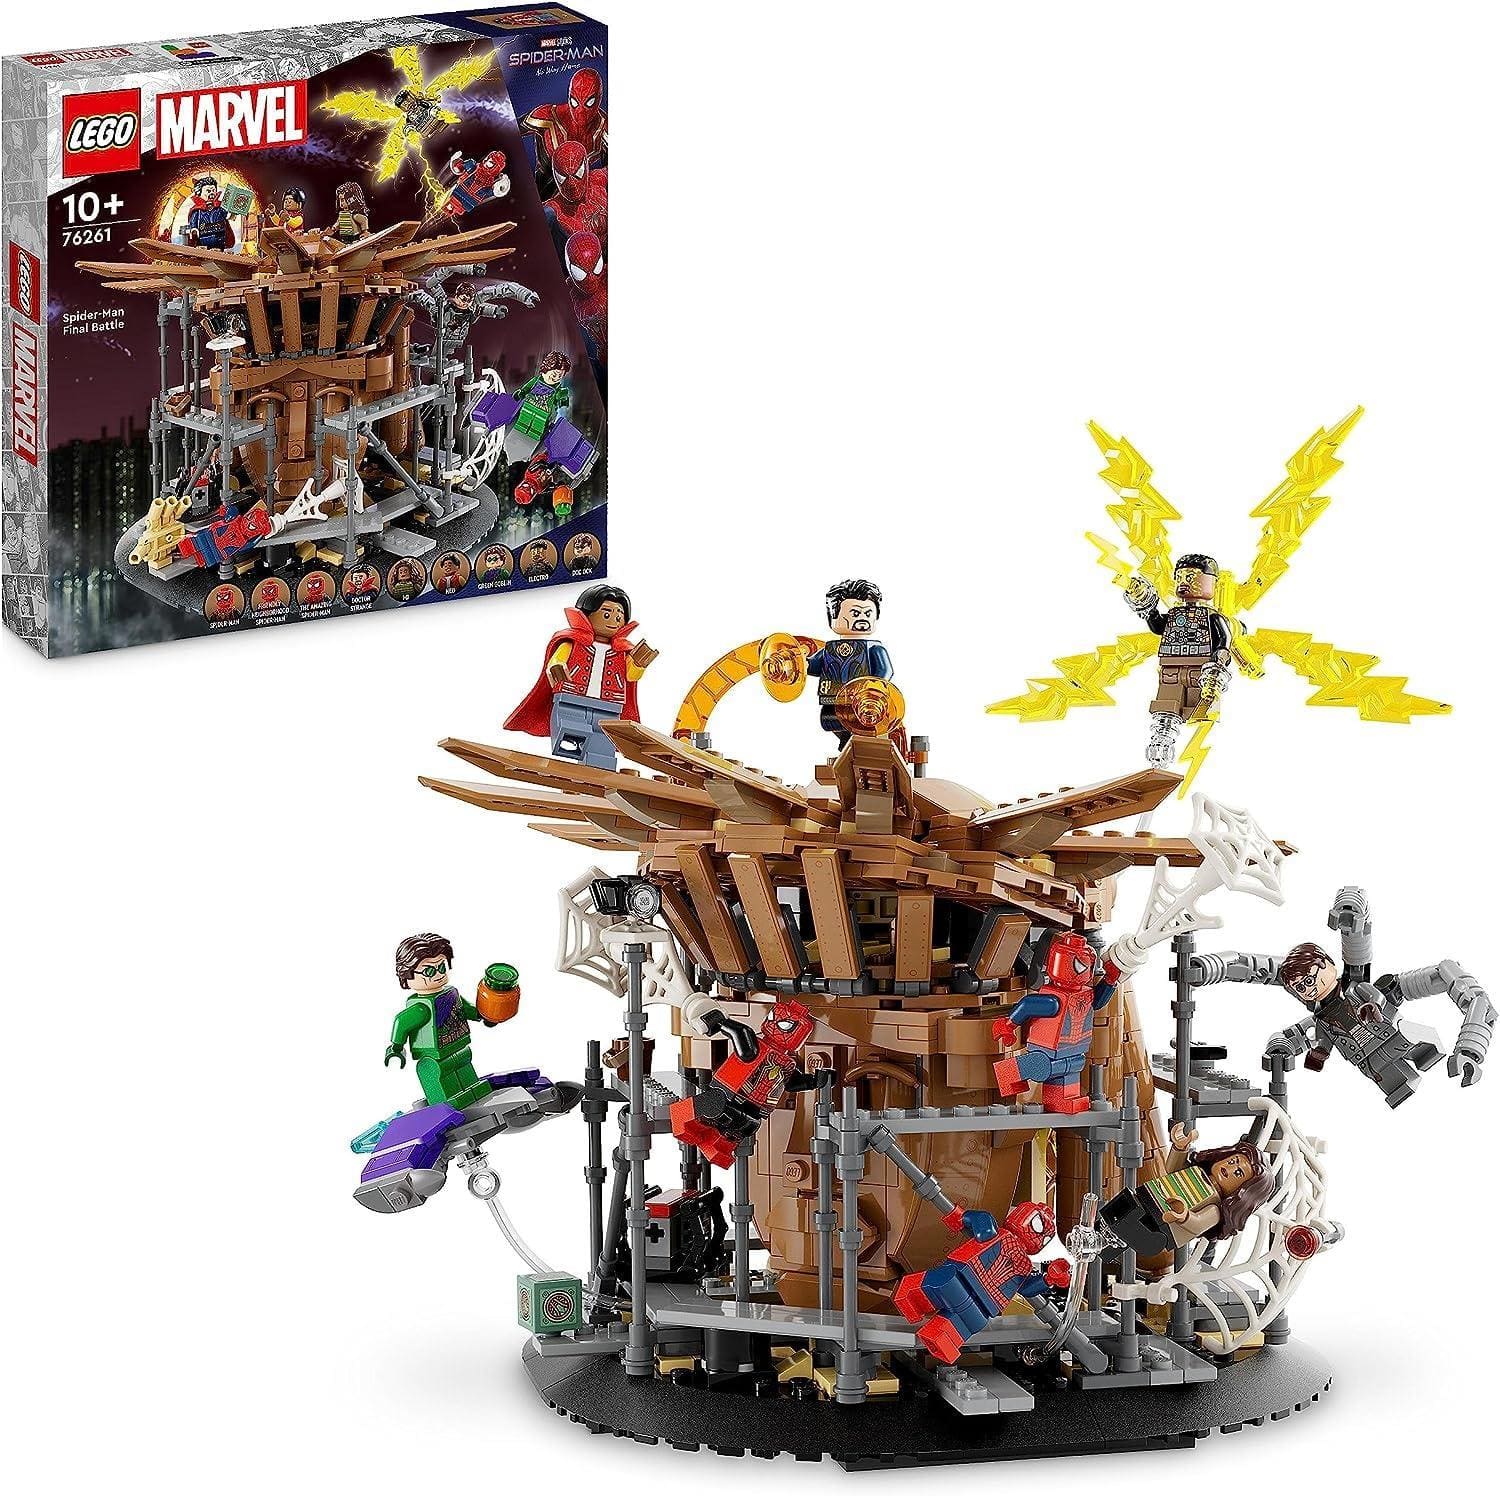 Lego Marvel Spider-Man Final Battle 76261 LEGO